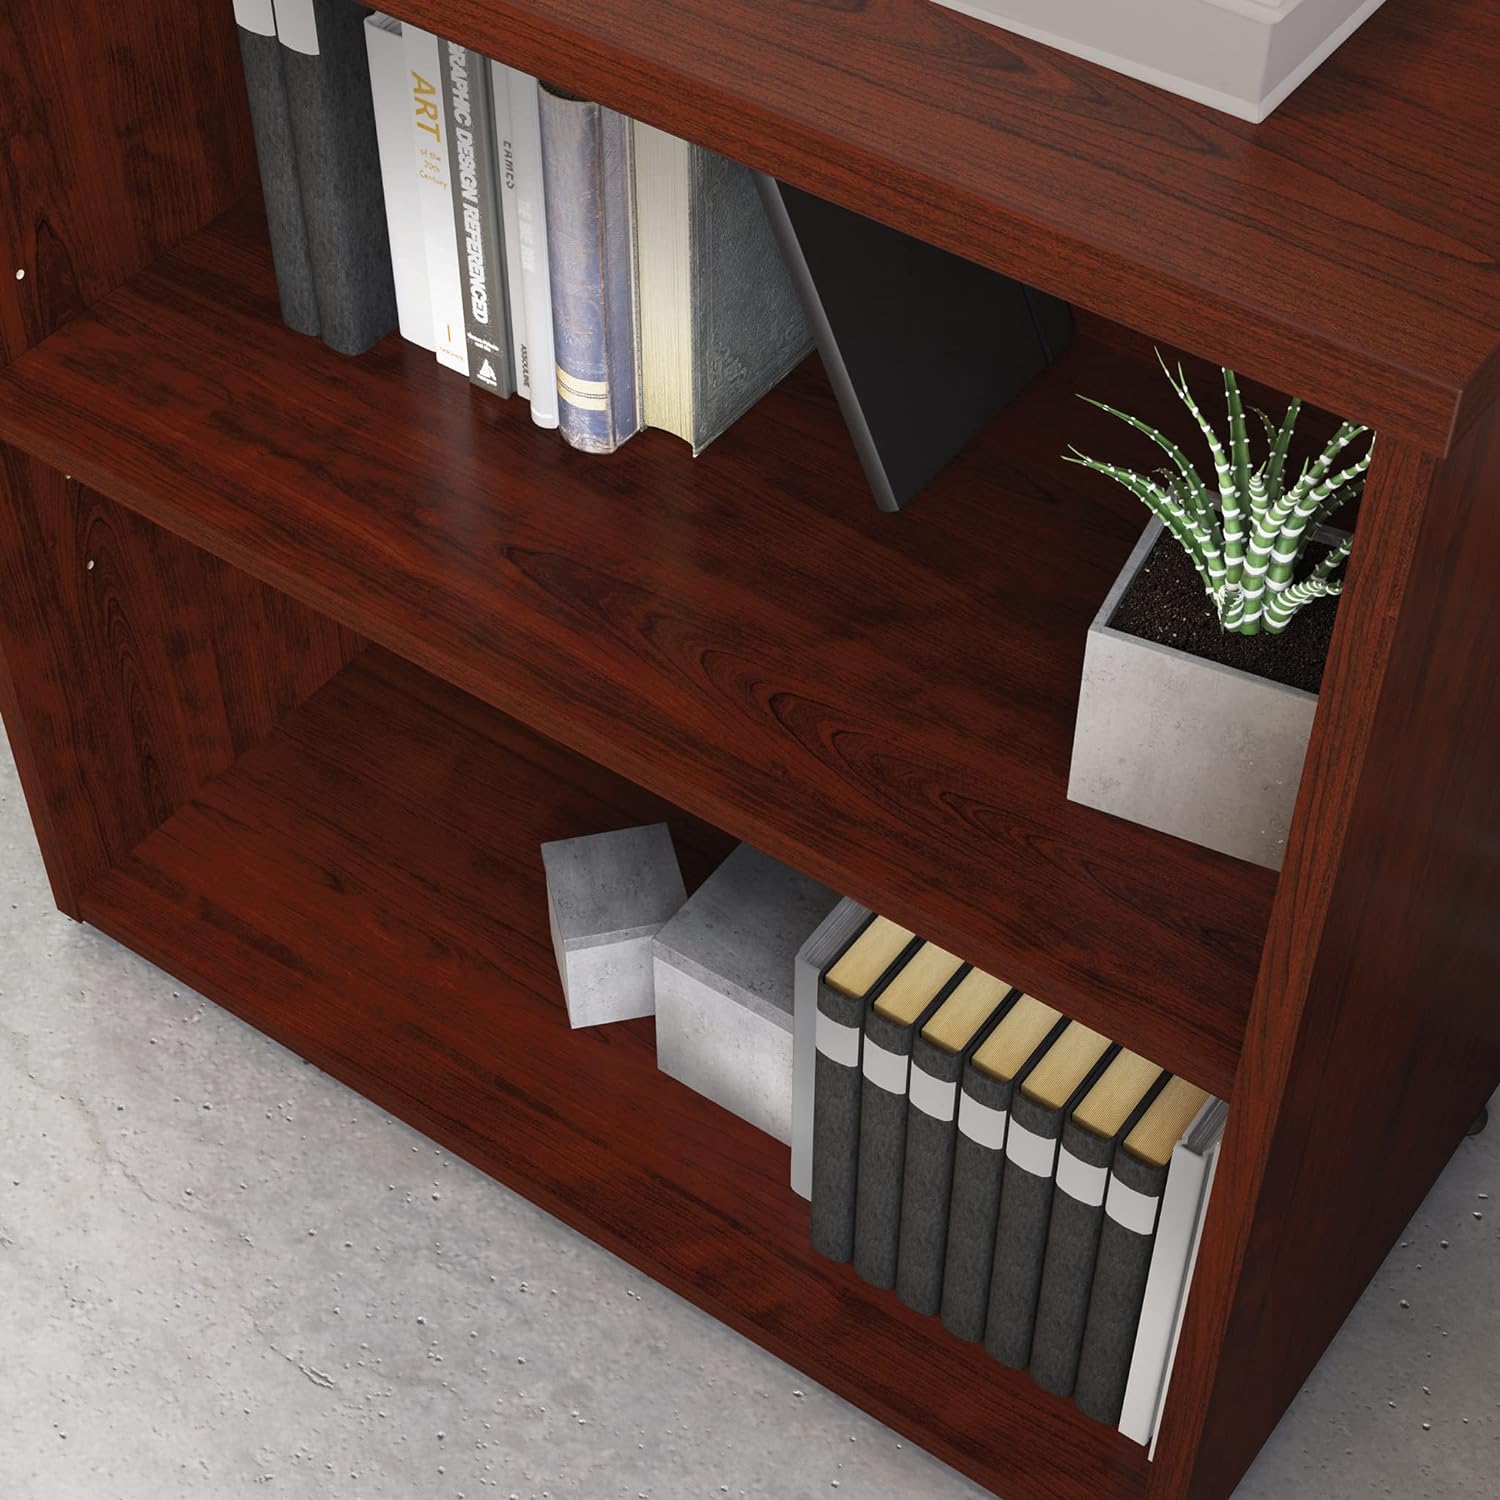 Sauder OfficeWorks by Sauder Affirm 2 Shelf Bookcase, Classic Cherry Finish